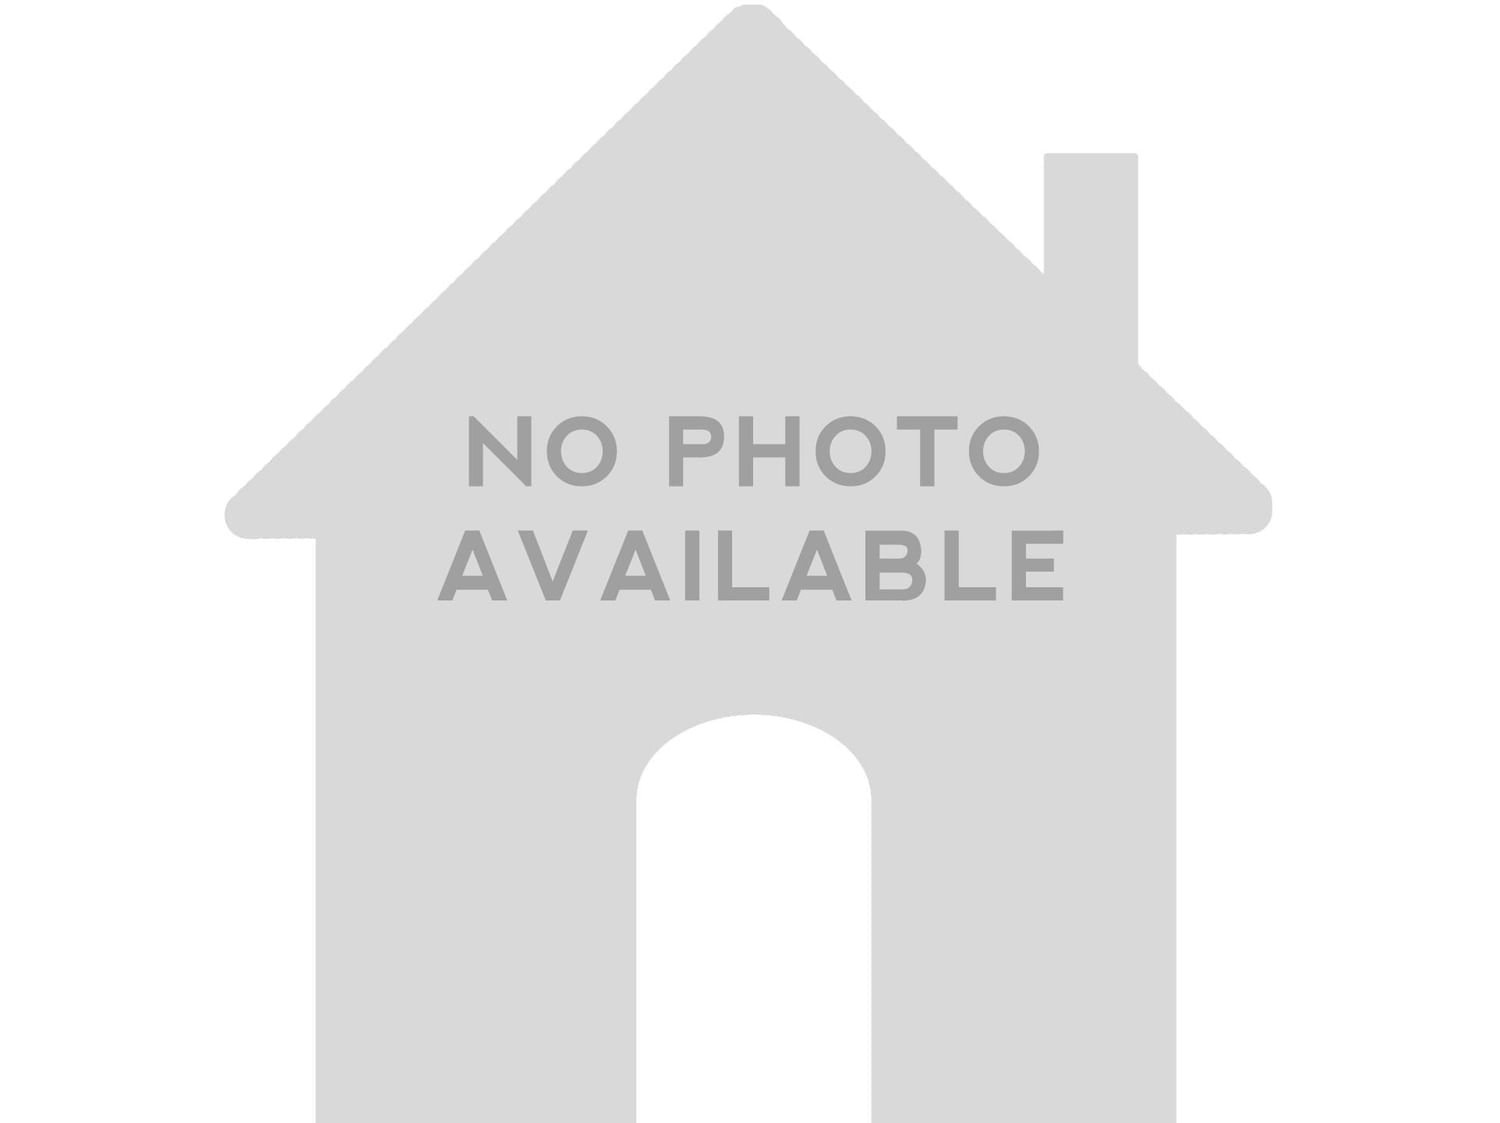 Real estate property located at 2486 Poinciana Ct, Broward County, Poinciana, Weston, FL